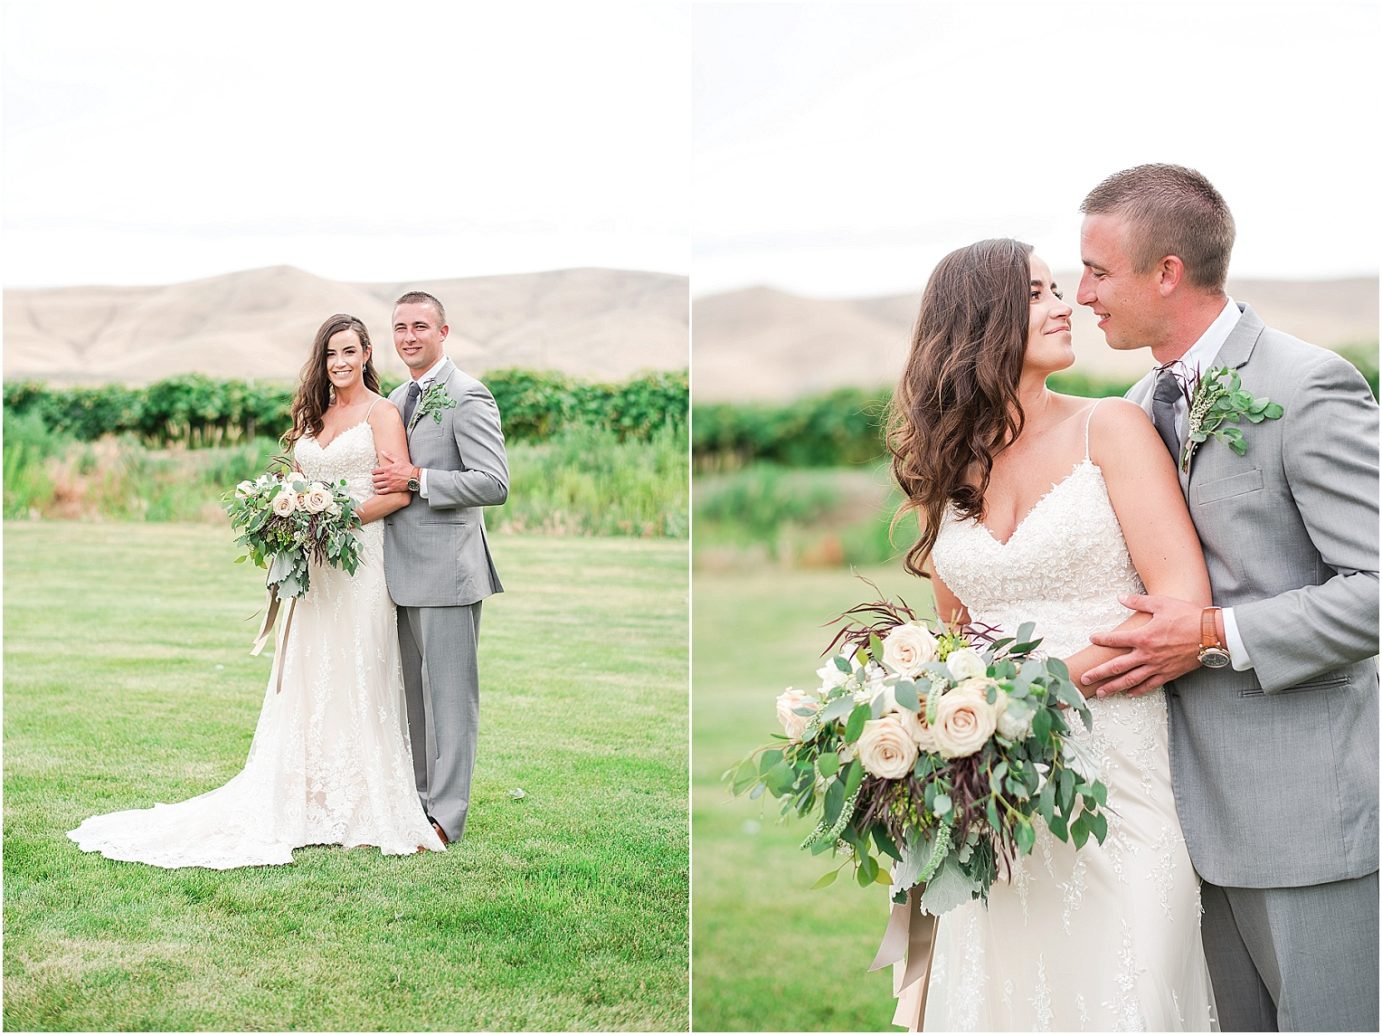 Romantic backyard wedding prosser photographer calvin and kelly bride and groom portrait